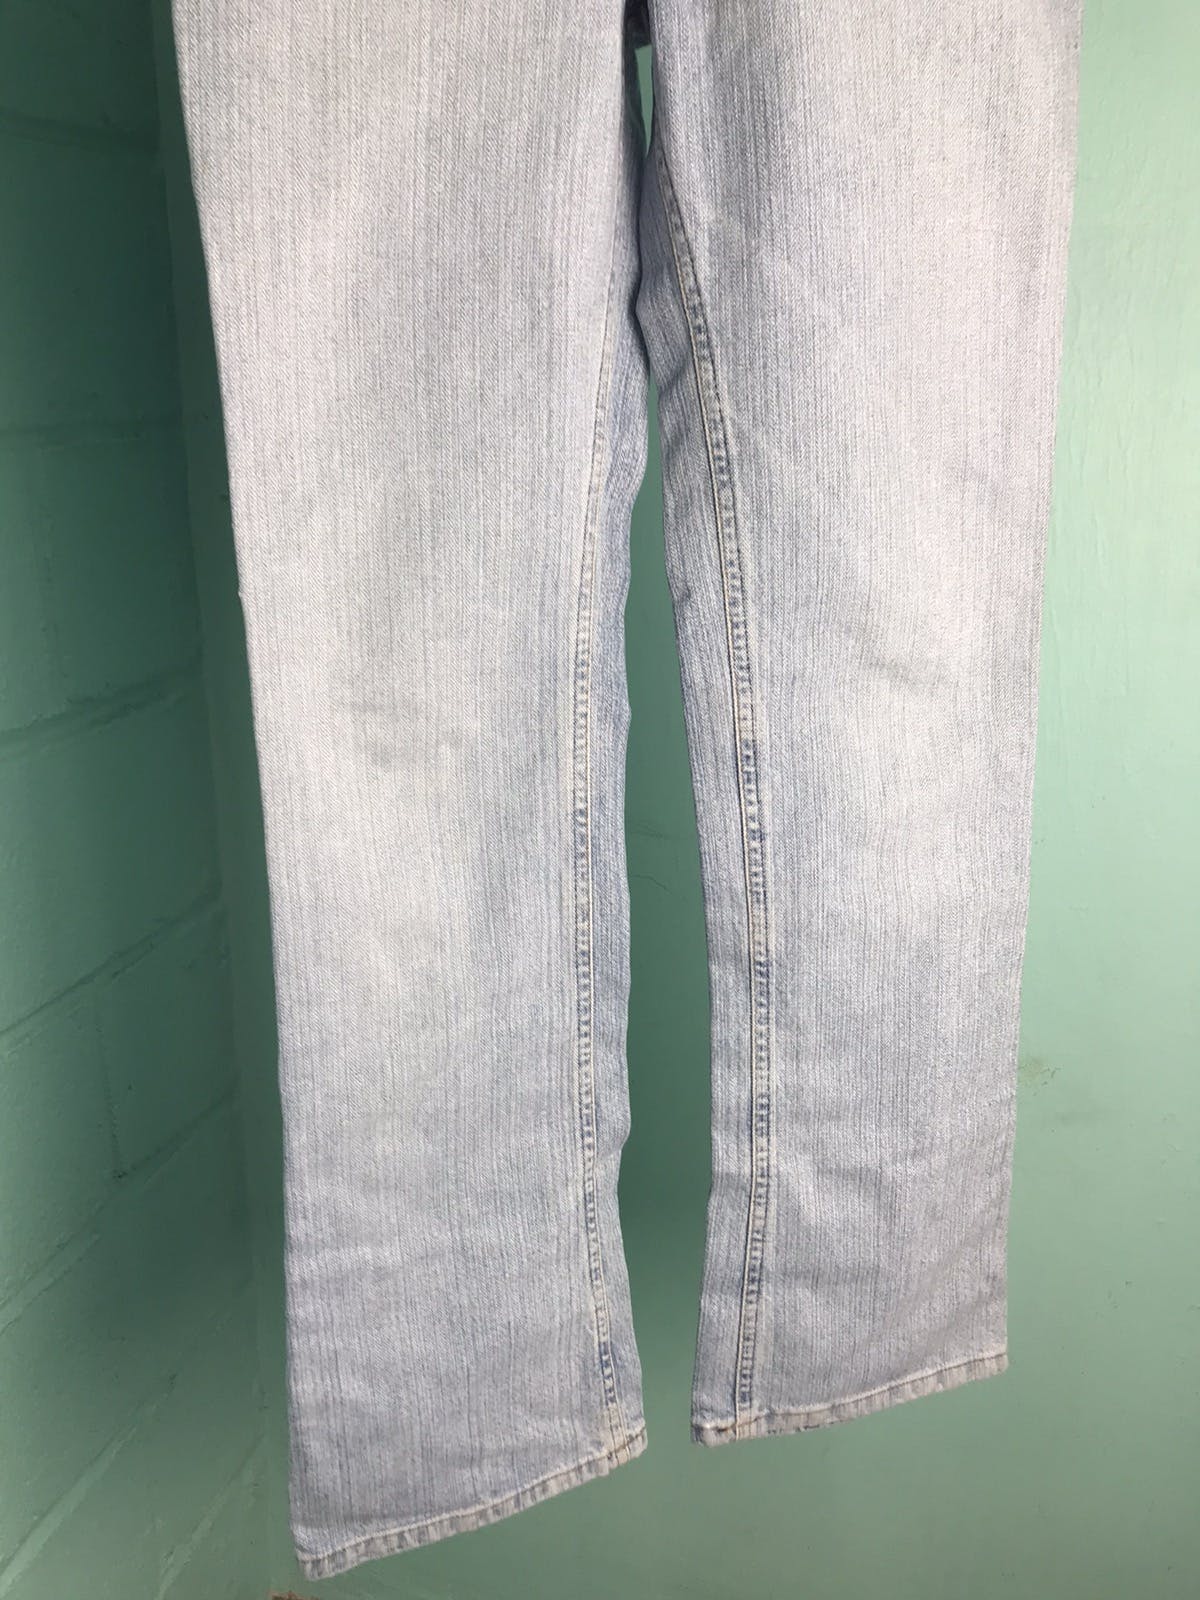 Vintage W&lt Denim Jeans - 5